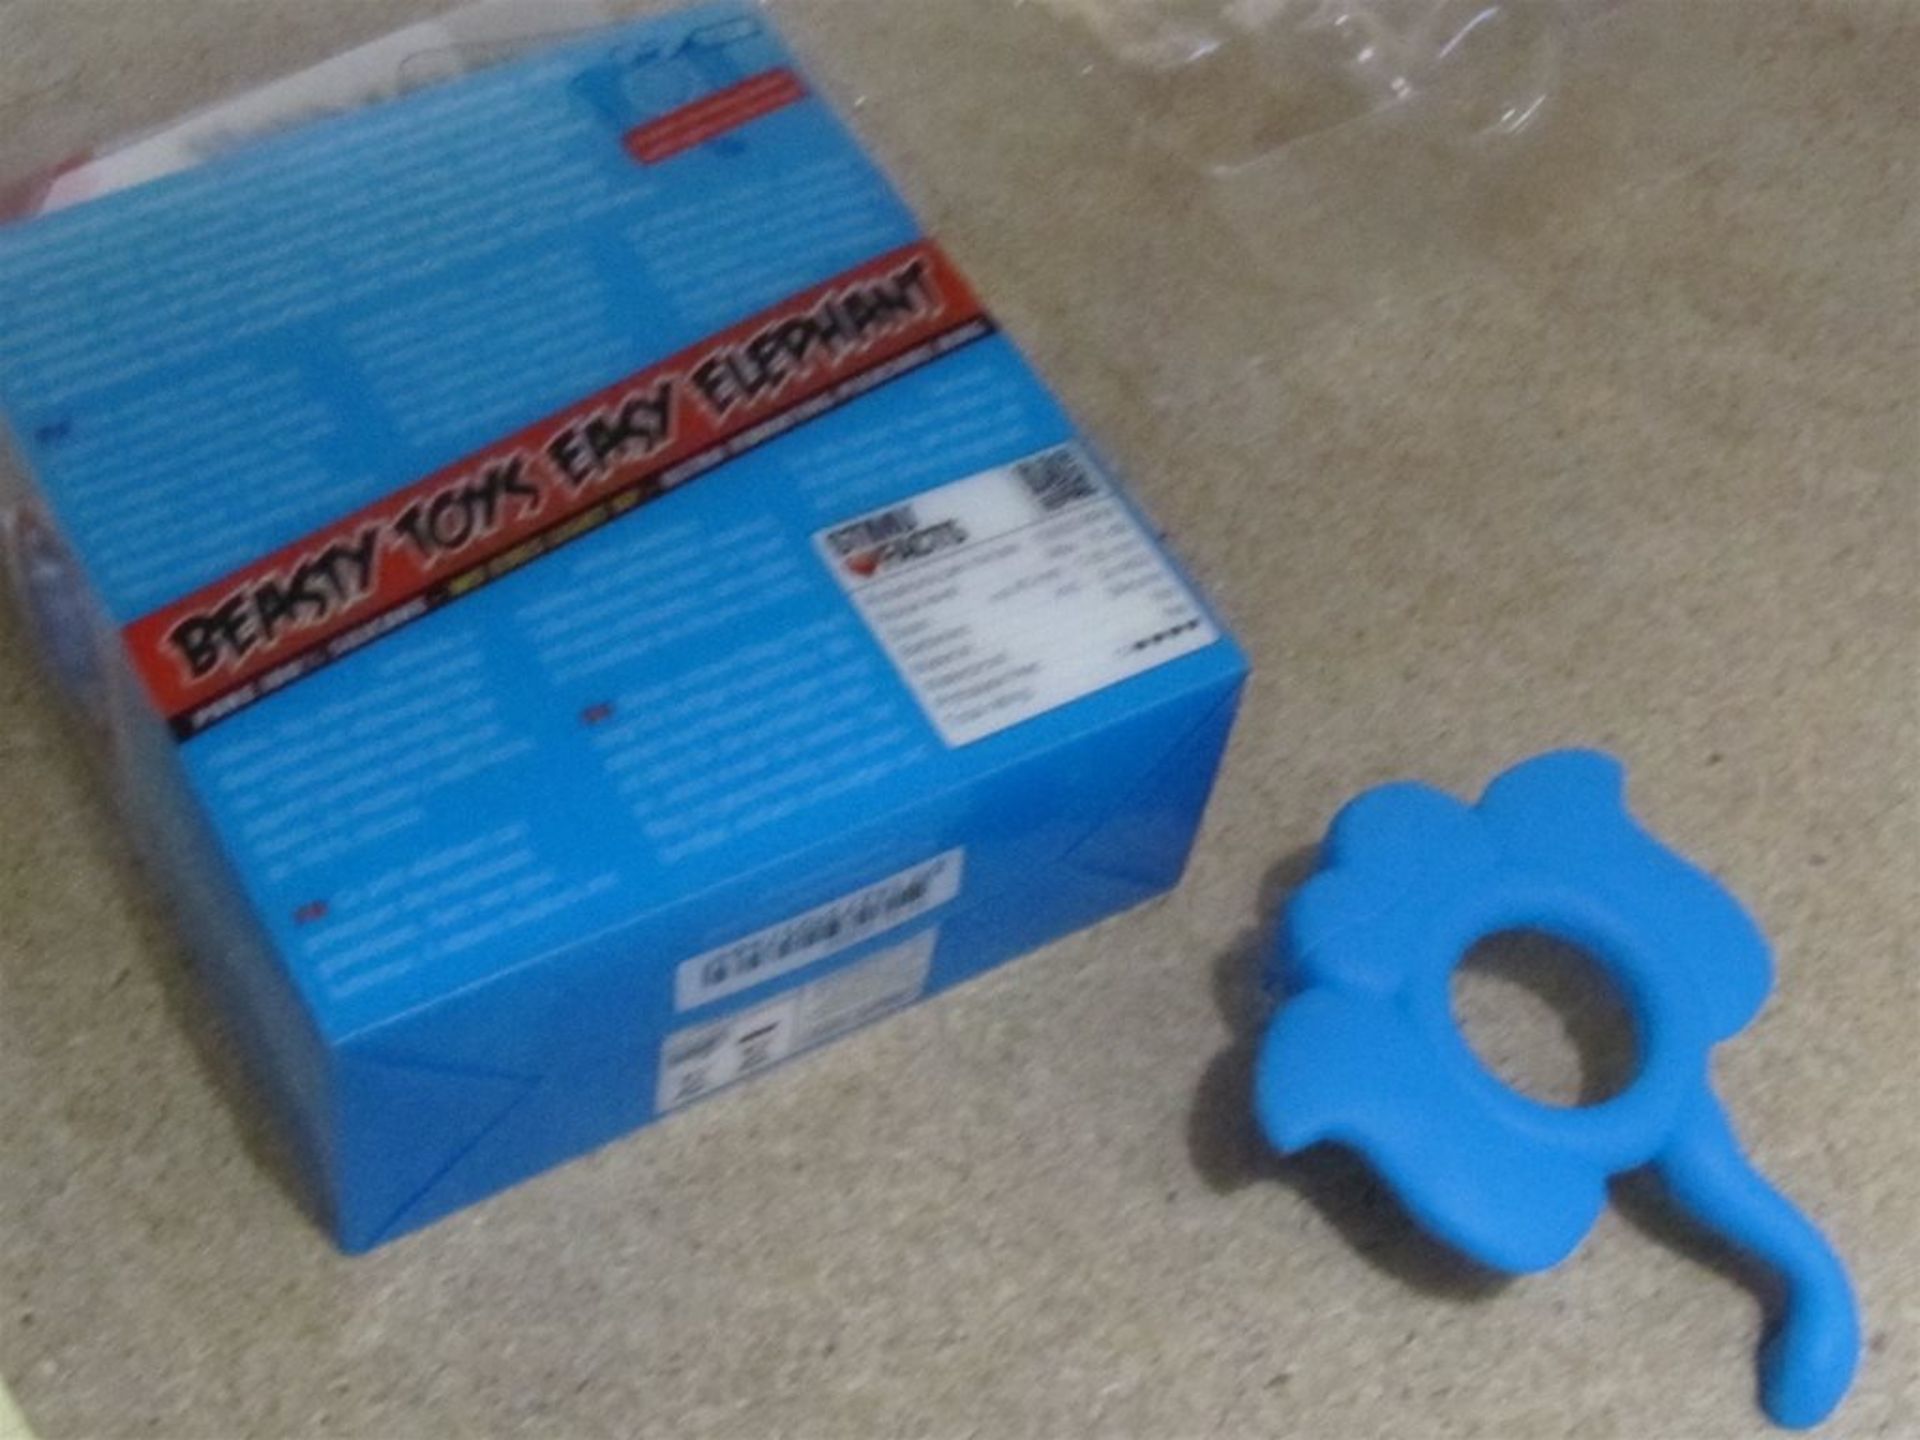 (339) Beasty Toys, Vibrating Elephant Ring. Blue. No vat on Hammer, Shipping available. - Image 2 of 4